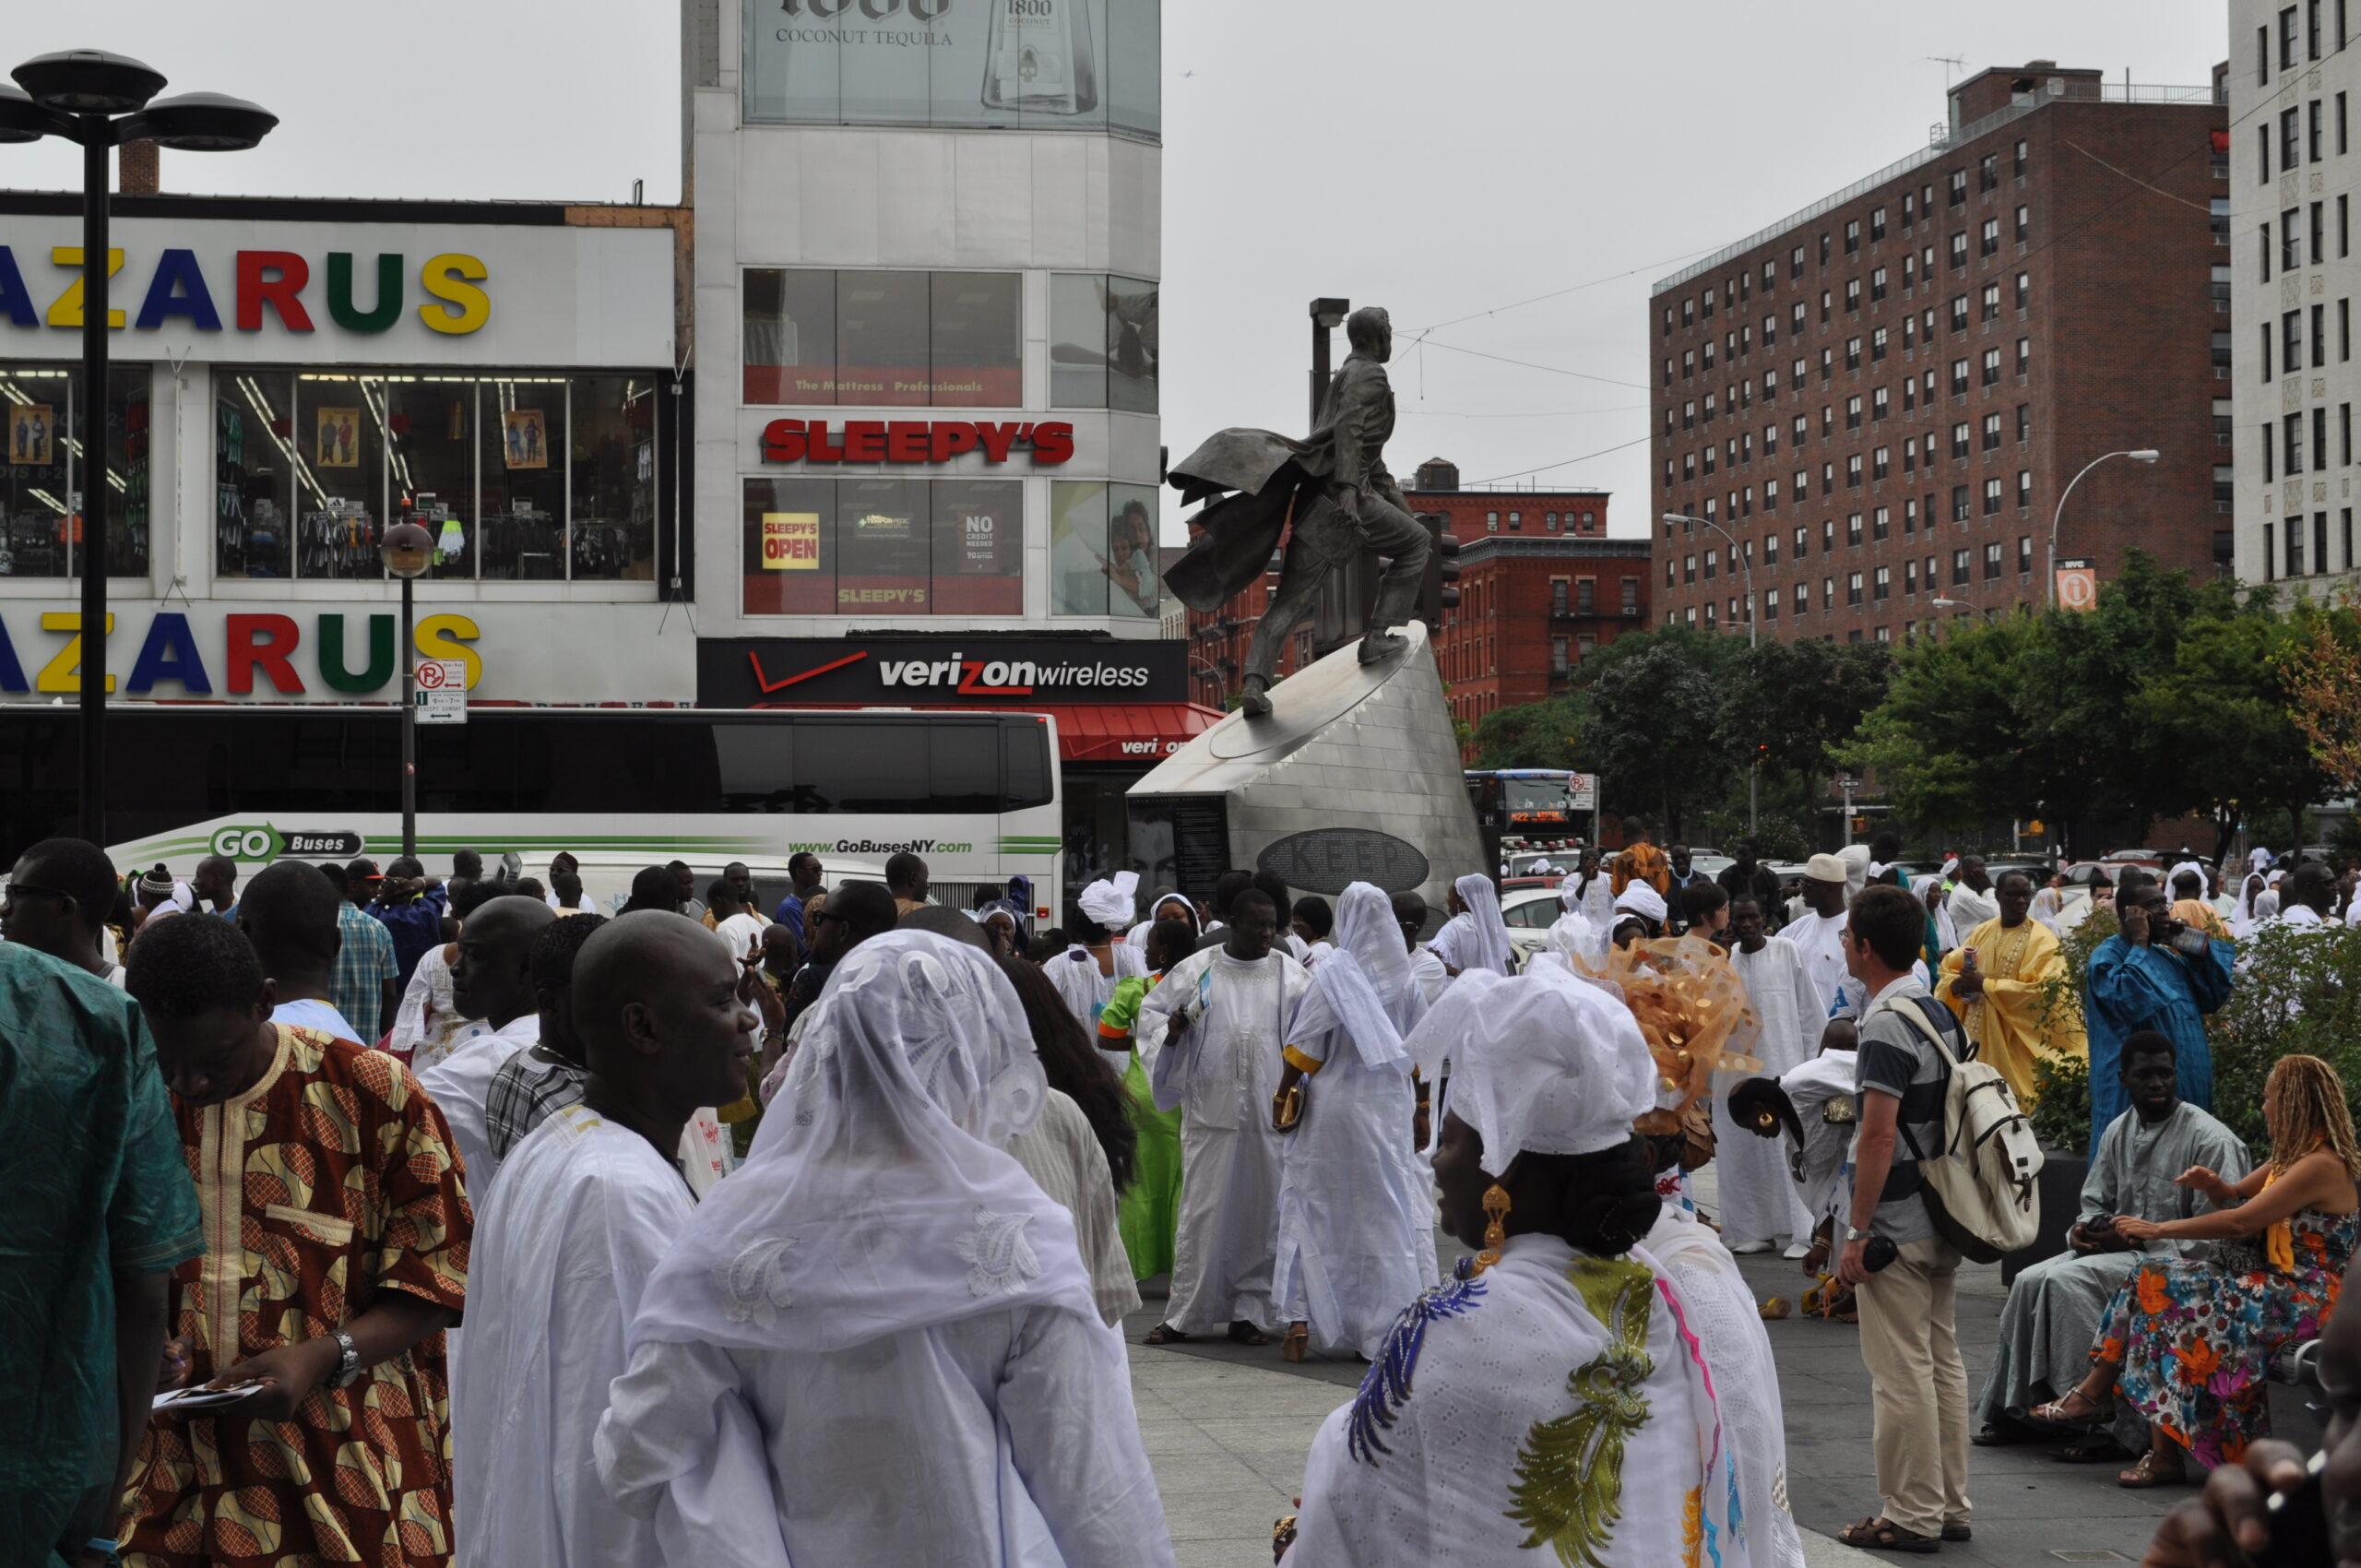 Ahmadu Bamba Day Celebration in New York City, July 28, 2013